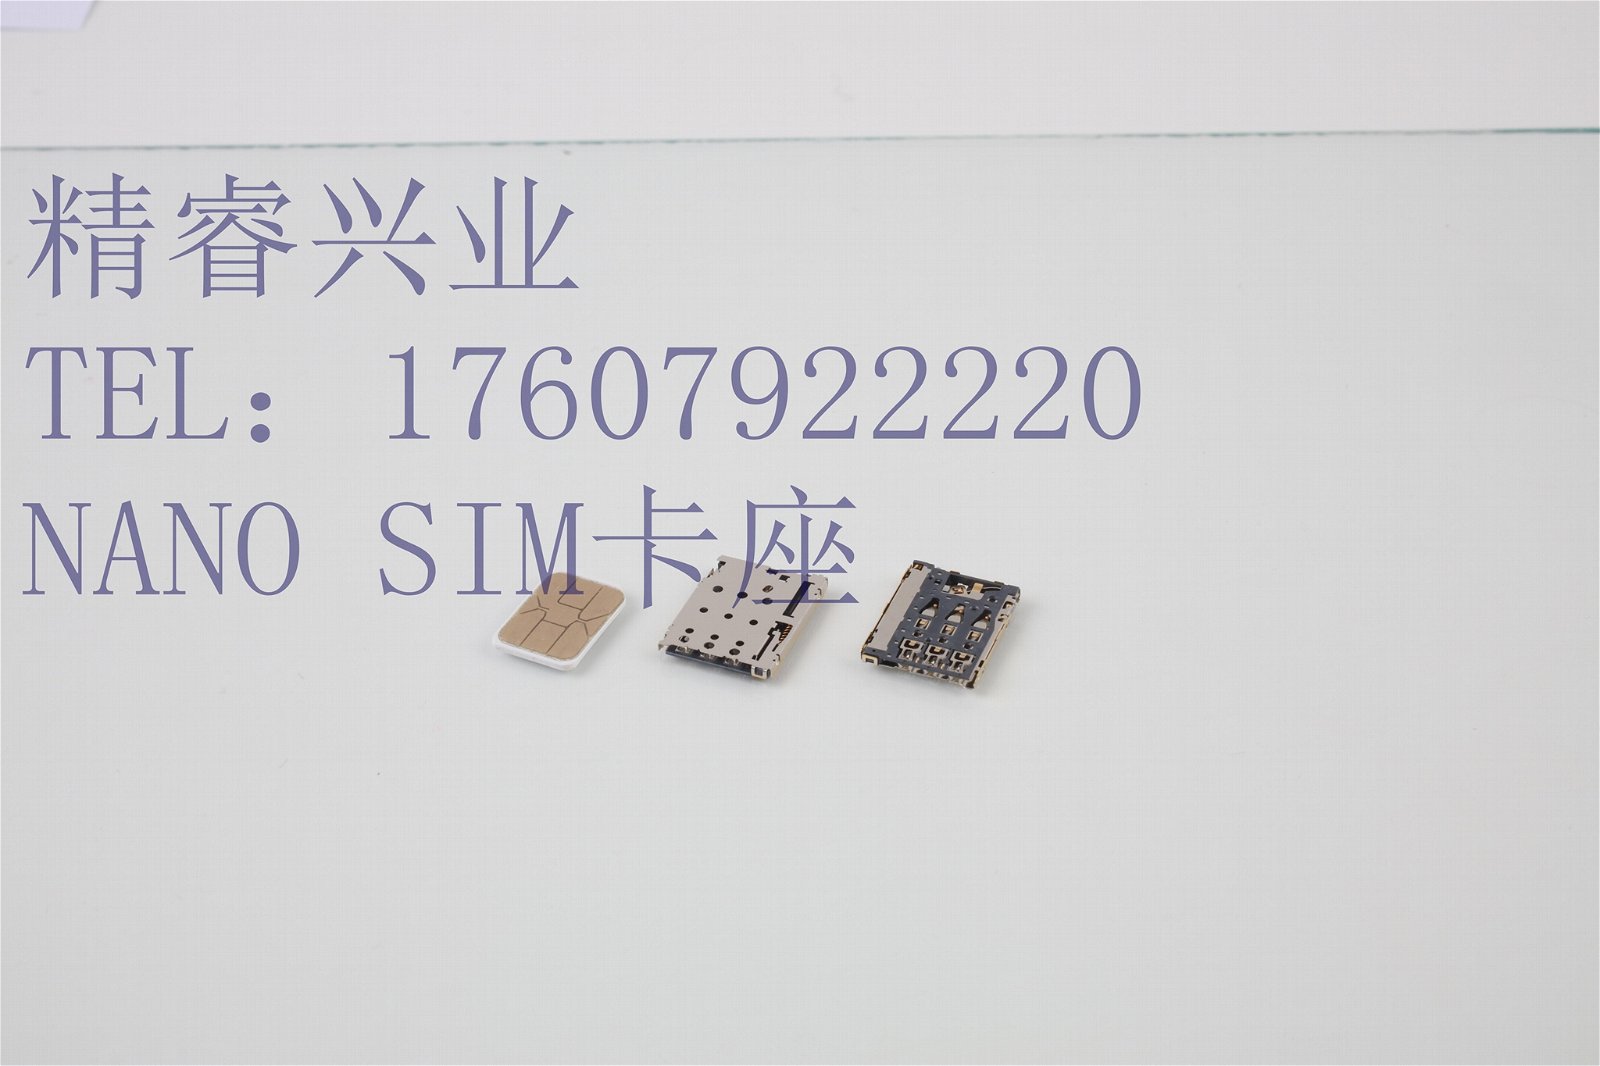 Manufacturer sells 1.25h Nano SIM card holder directly